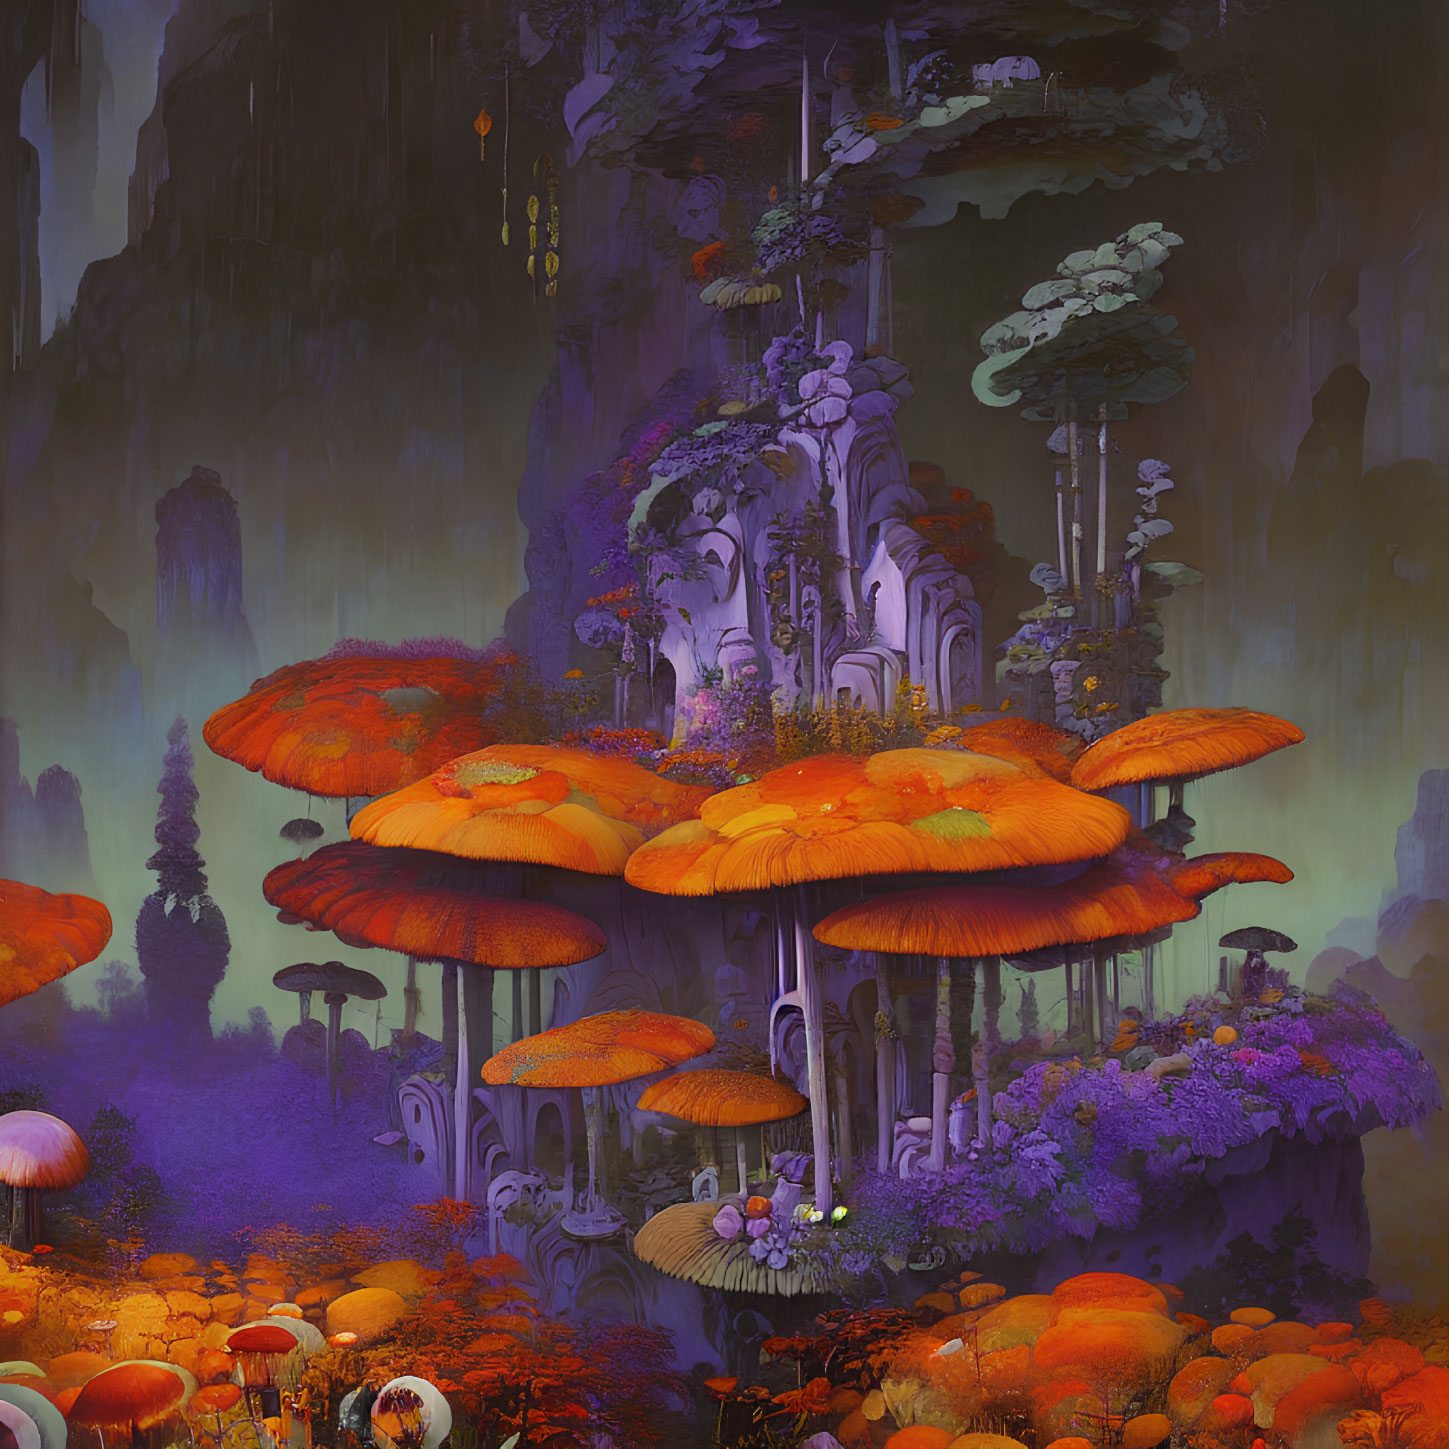 Fantastical landscape with towering orange mushrooms and purple foliage under a violet sky